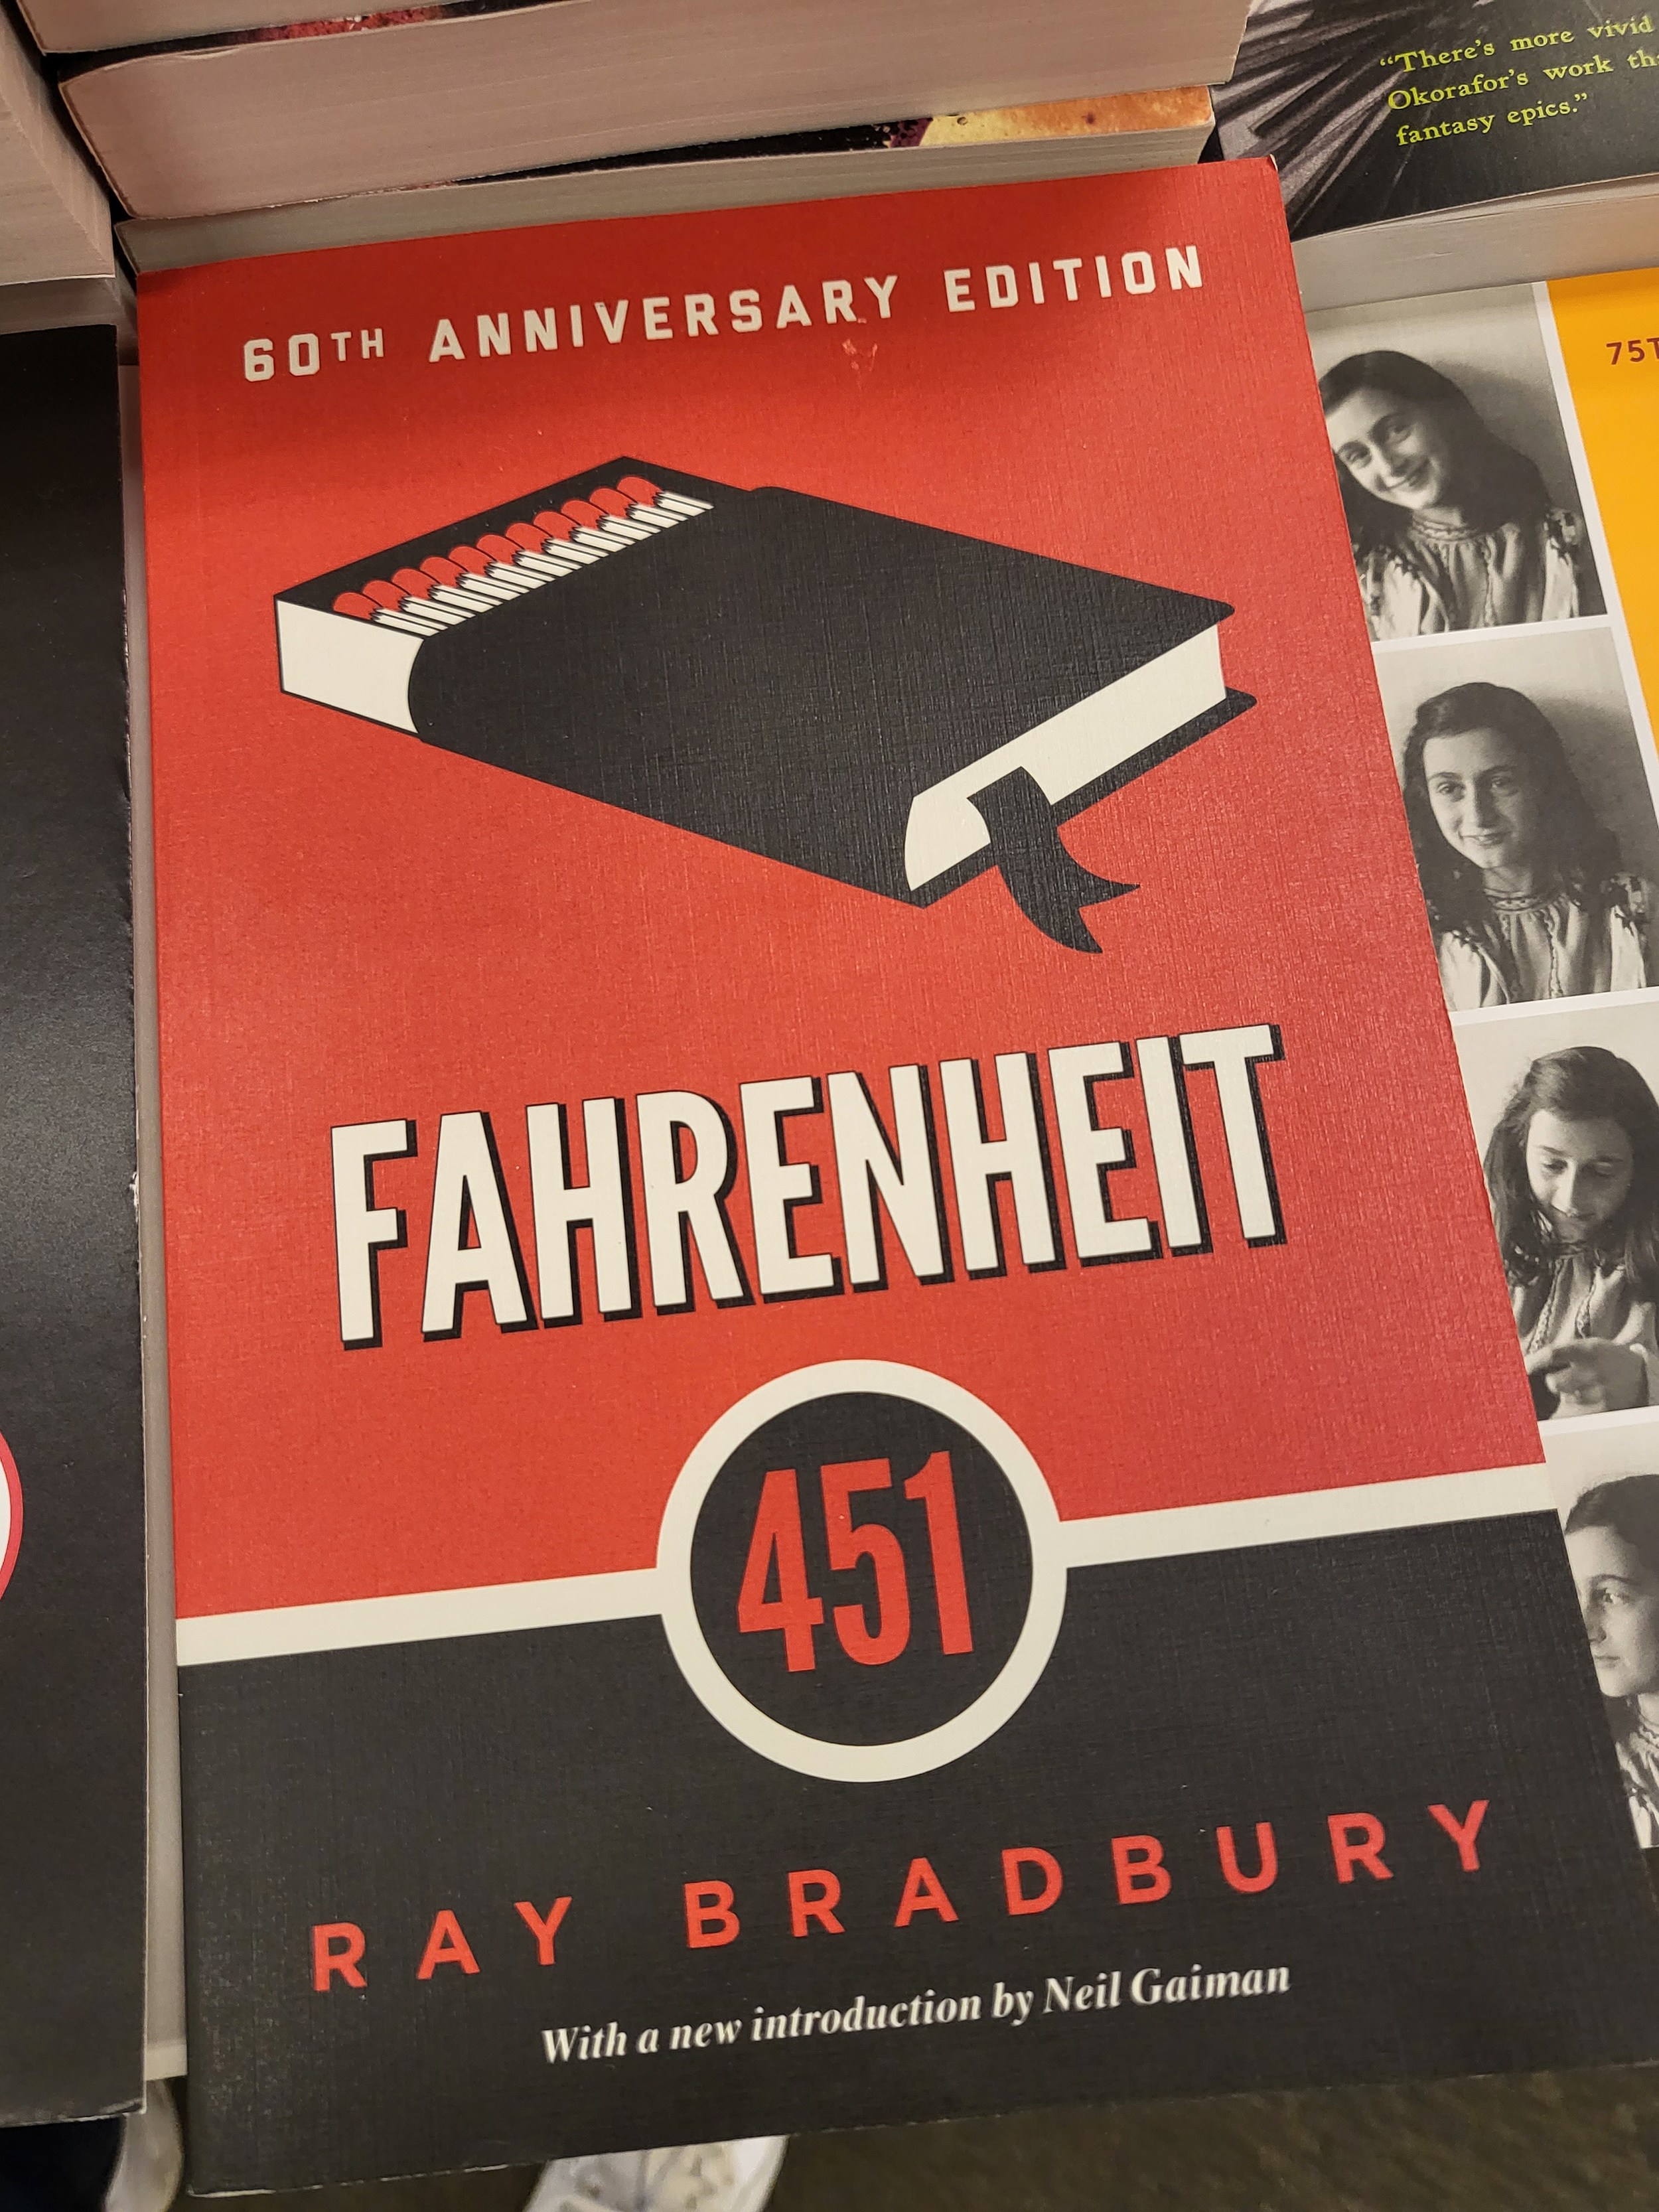 Celebrating The 70th Anniversary of Fahrenheit 451